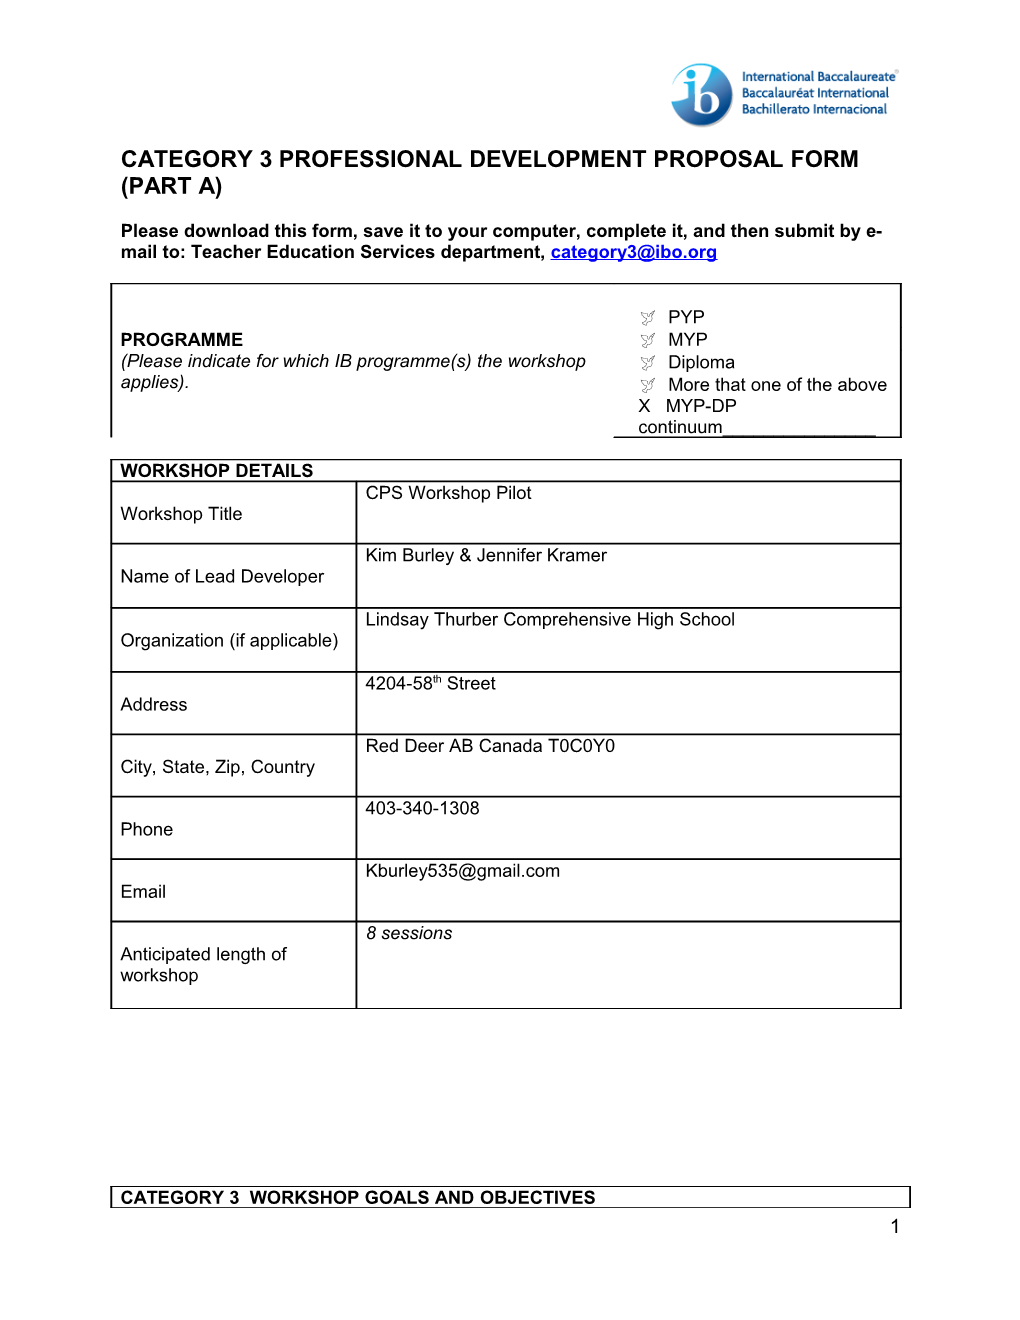 Category 3 Professional Development Proposal Form (Part A)